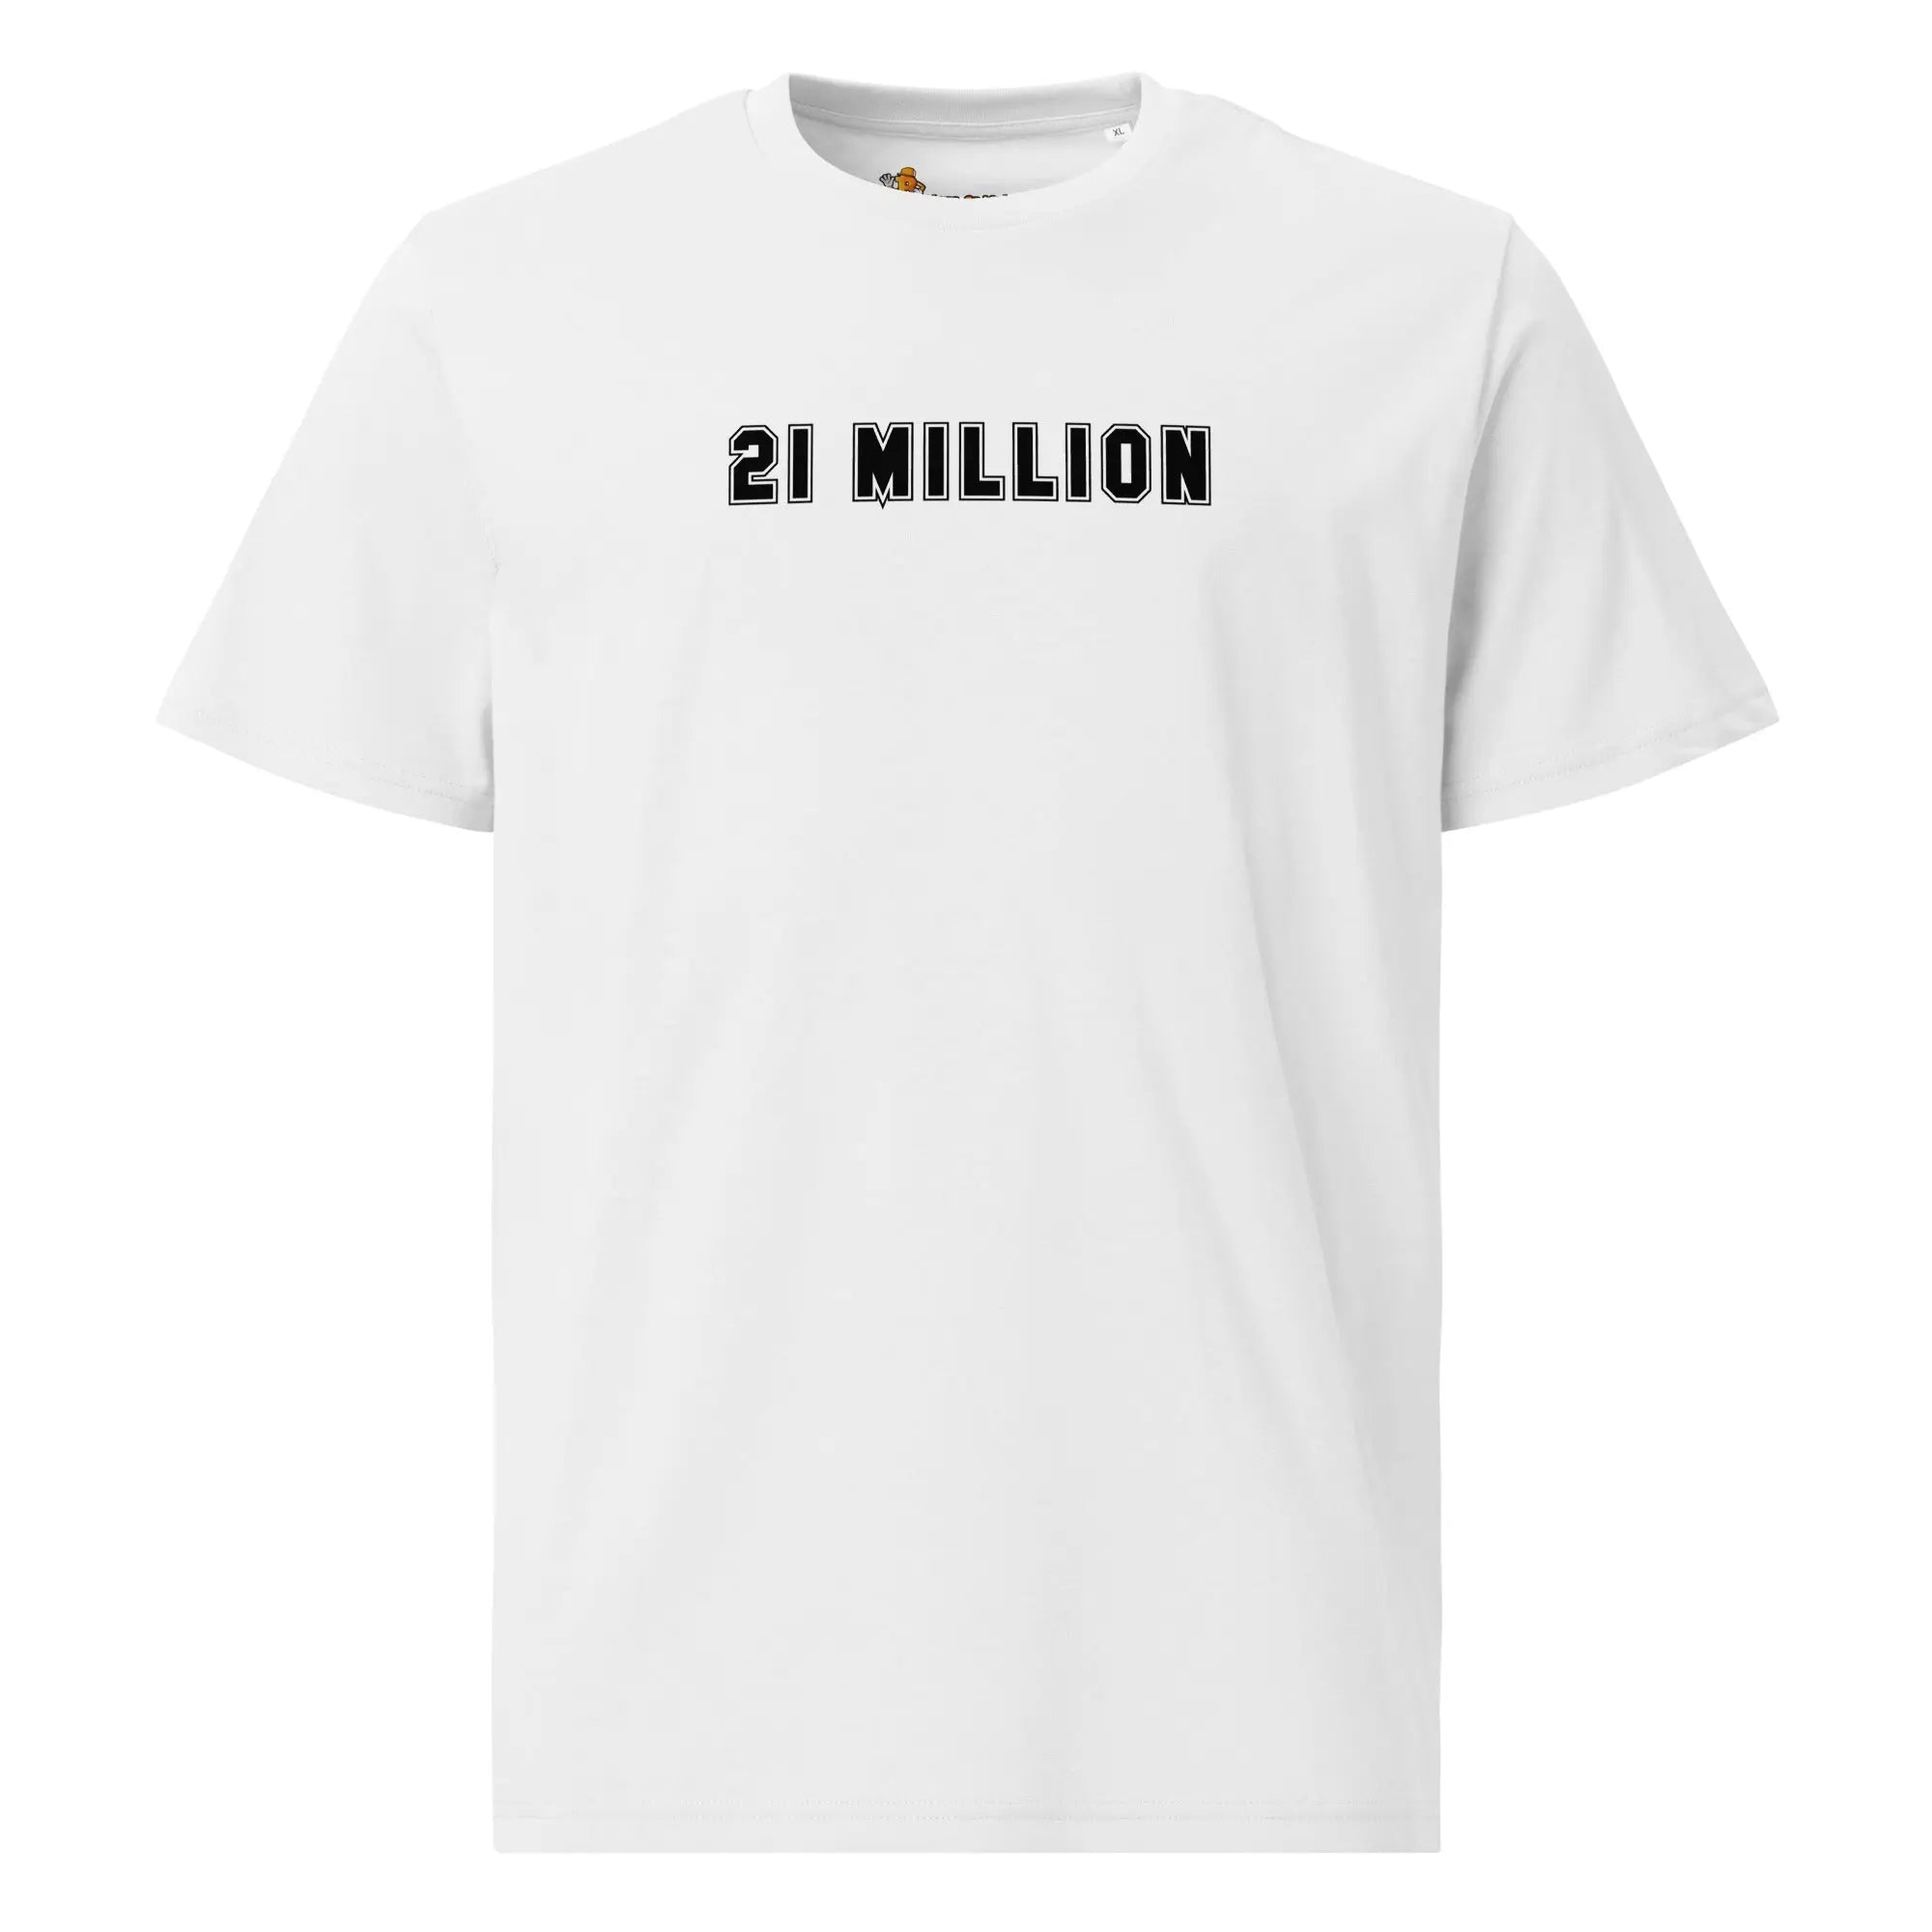 21 Million - Premium Unisex Organic Cotton Bitcoin T-shirt White Color